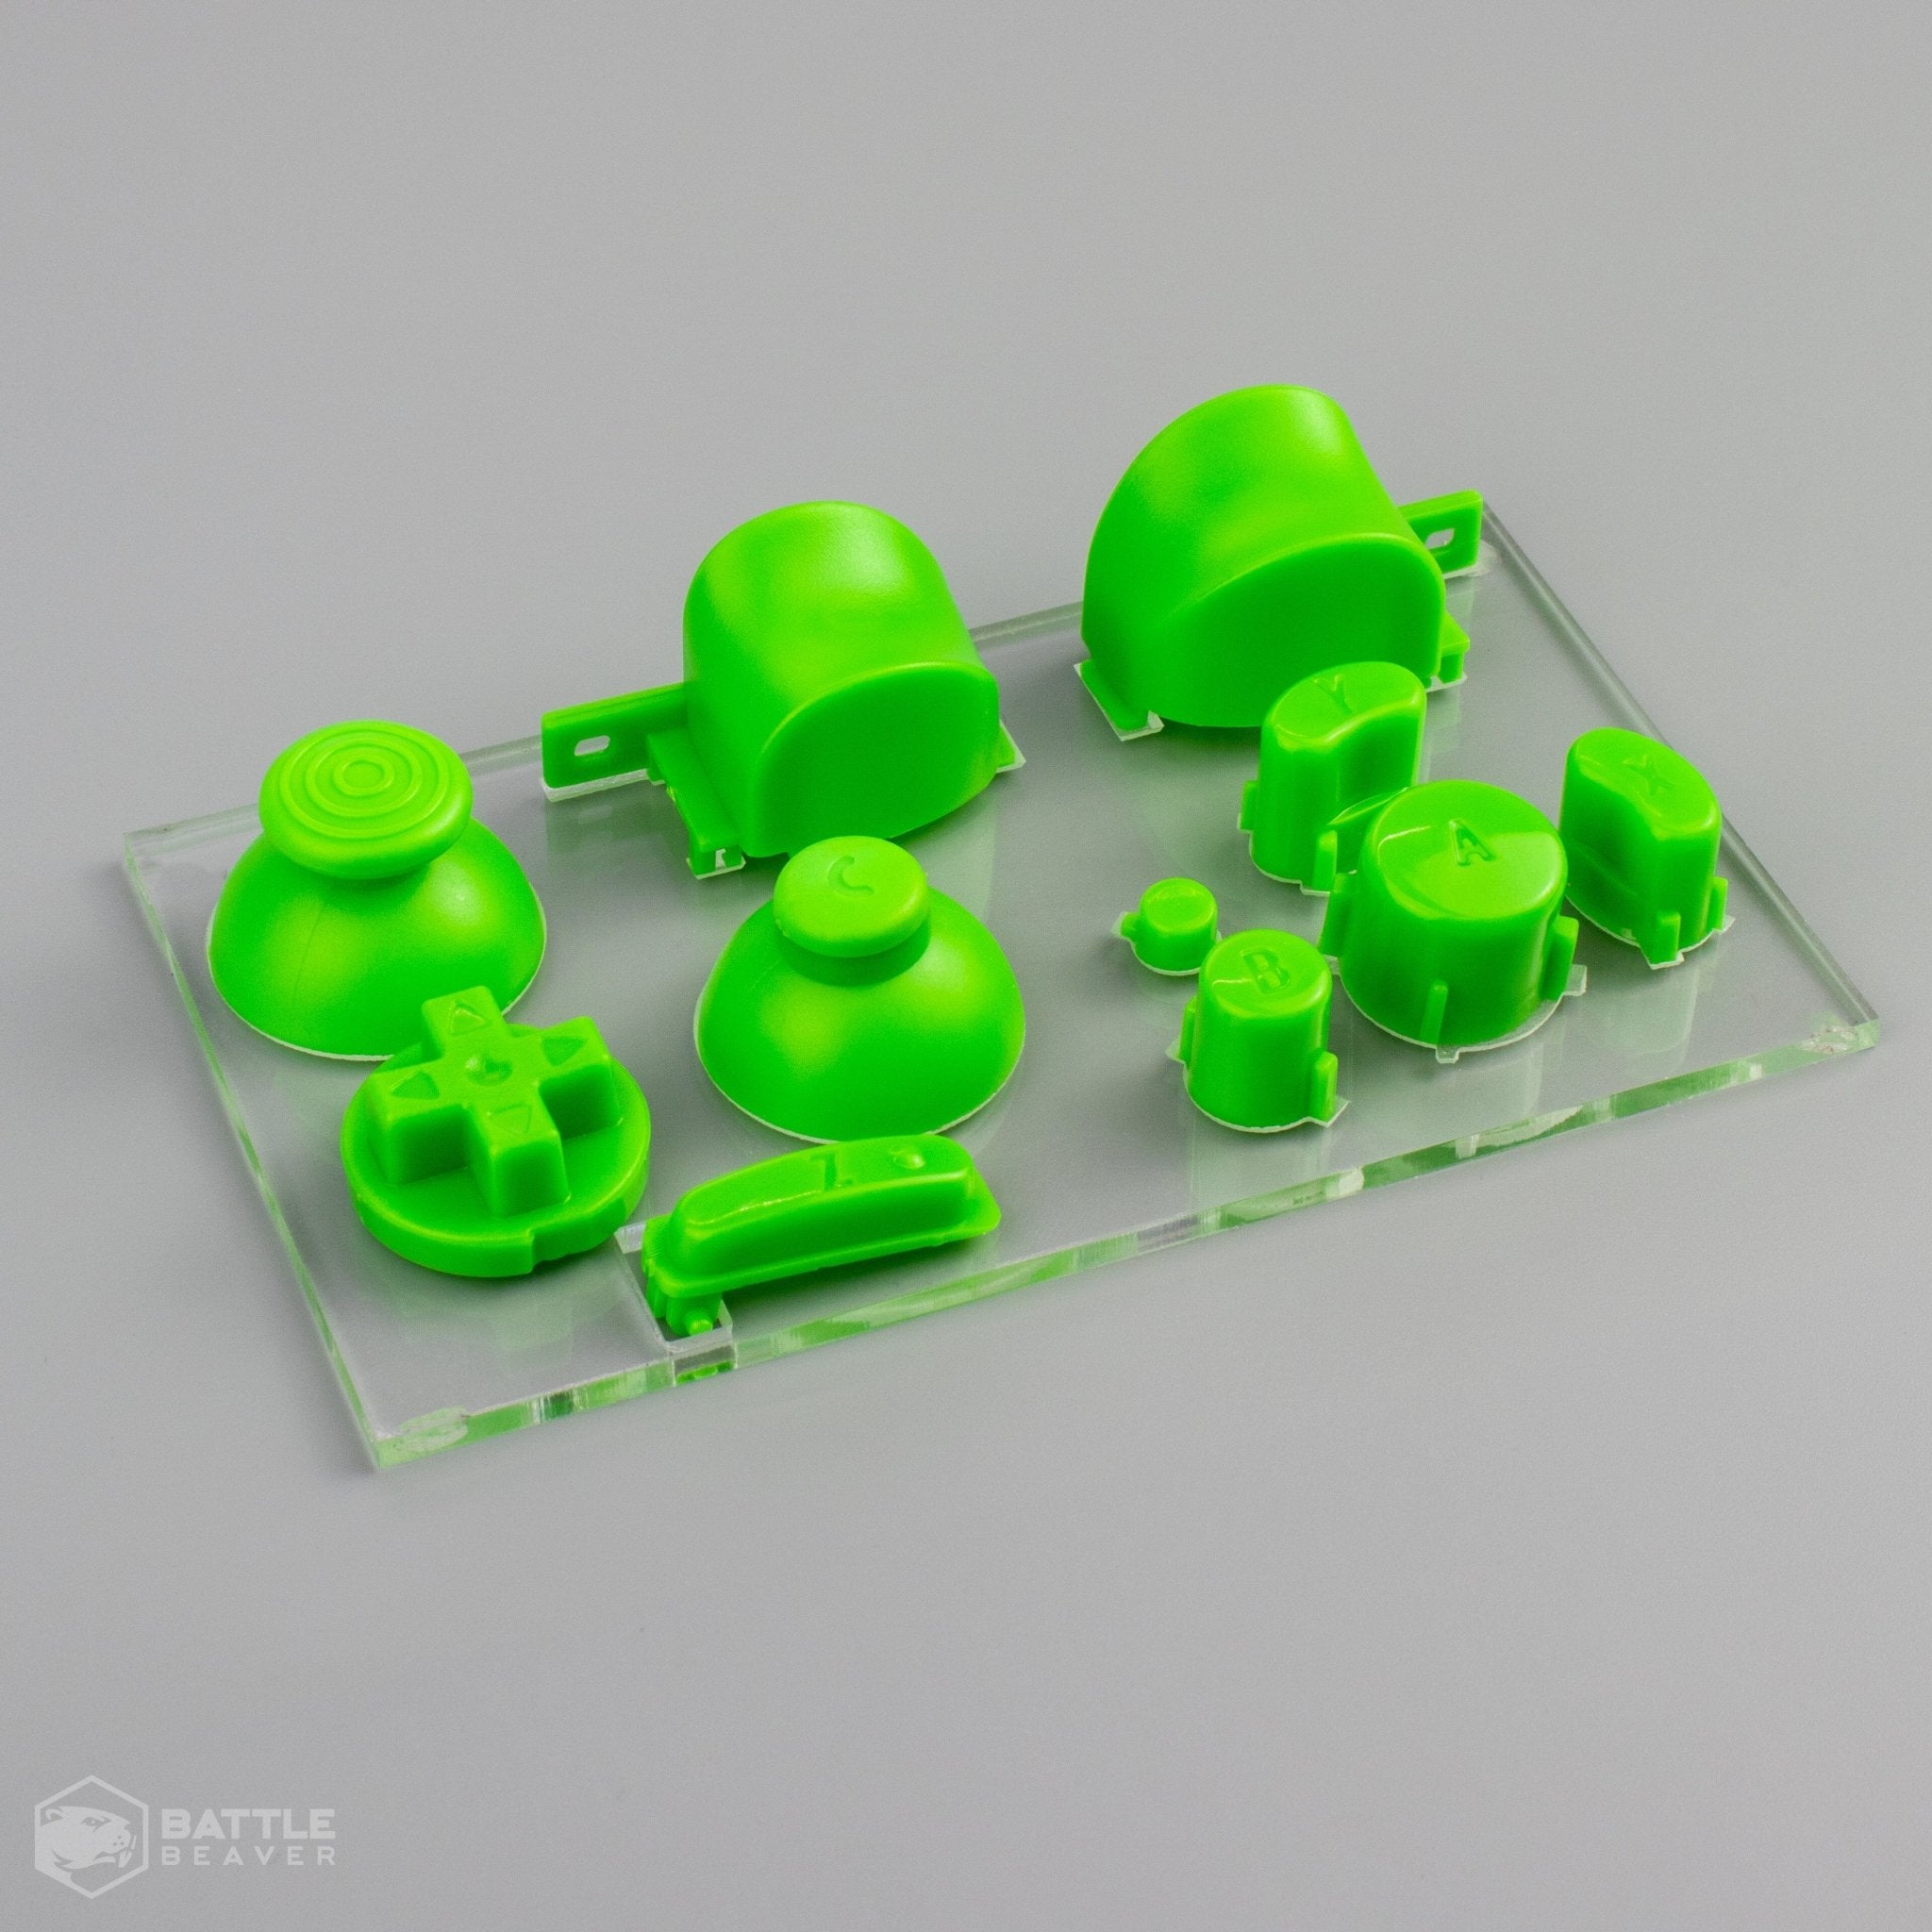 3rd Party Gamecube Parts Kit - Battle Beaver Customs - Green